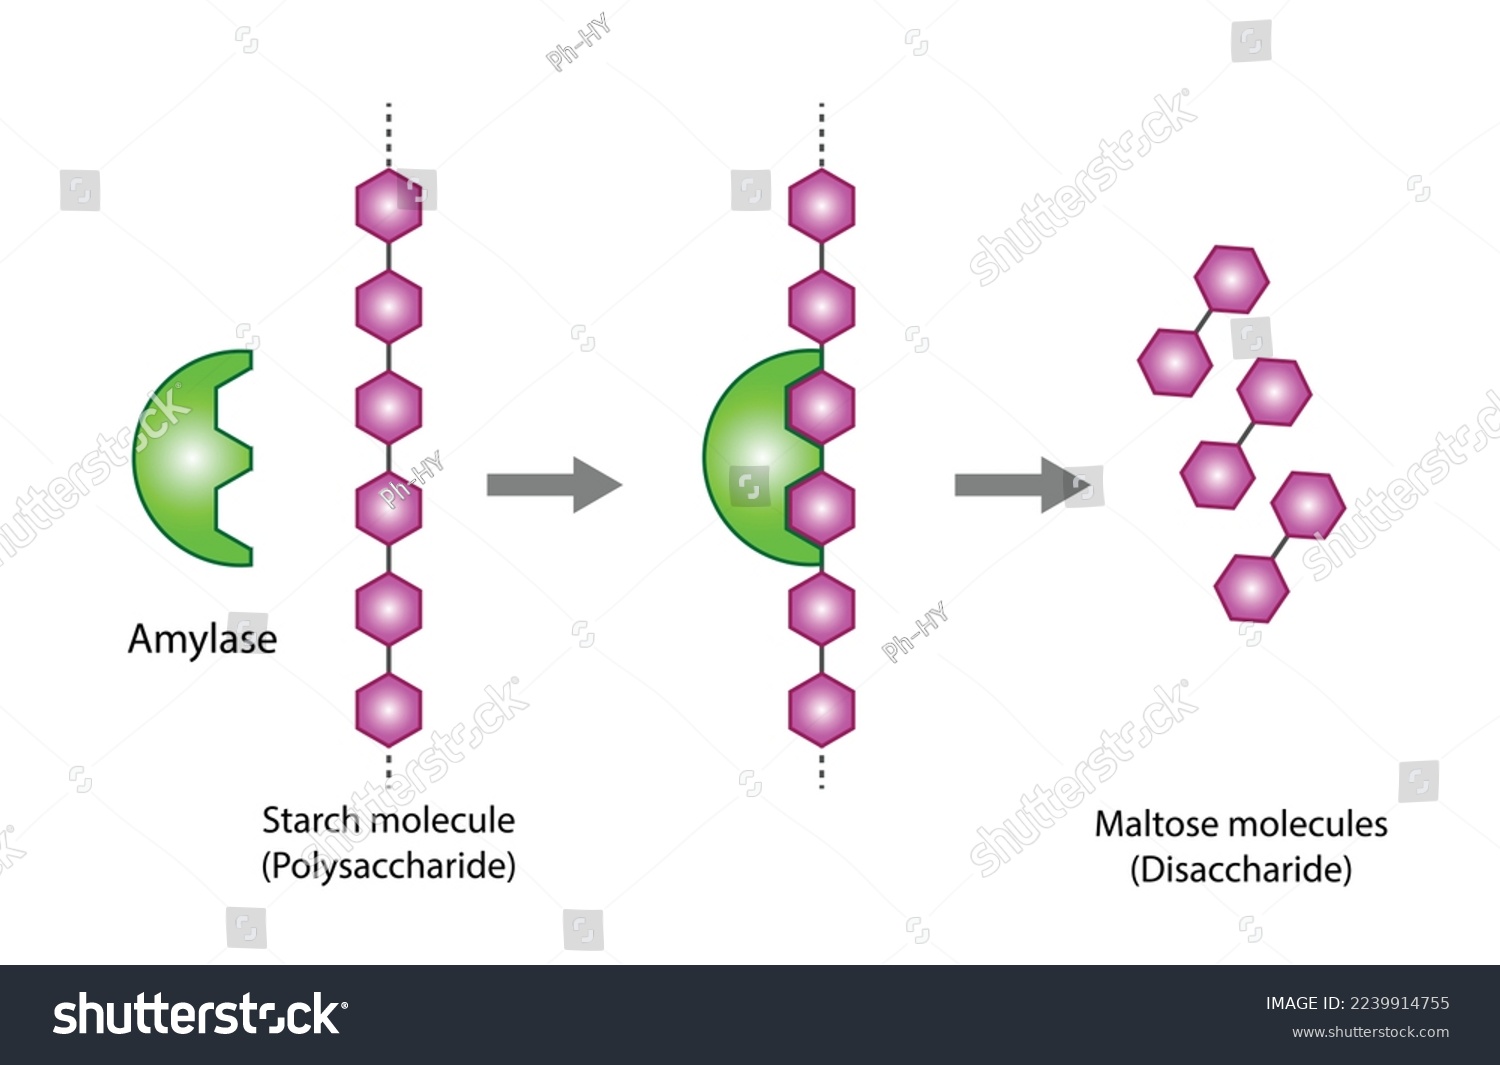 SVG of Carbohydrates Digestion. Amylase Enzyme catalyze Polysaccharide Starch Molecule to Disaccharide Maltose Molecules, glucose Sugar Formation. Scientific Diagram. Vector Illustration. svg